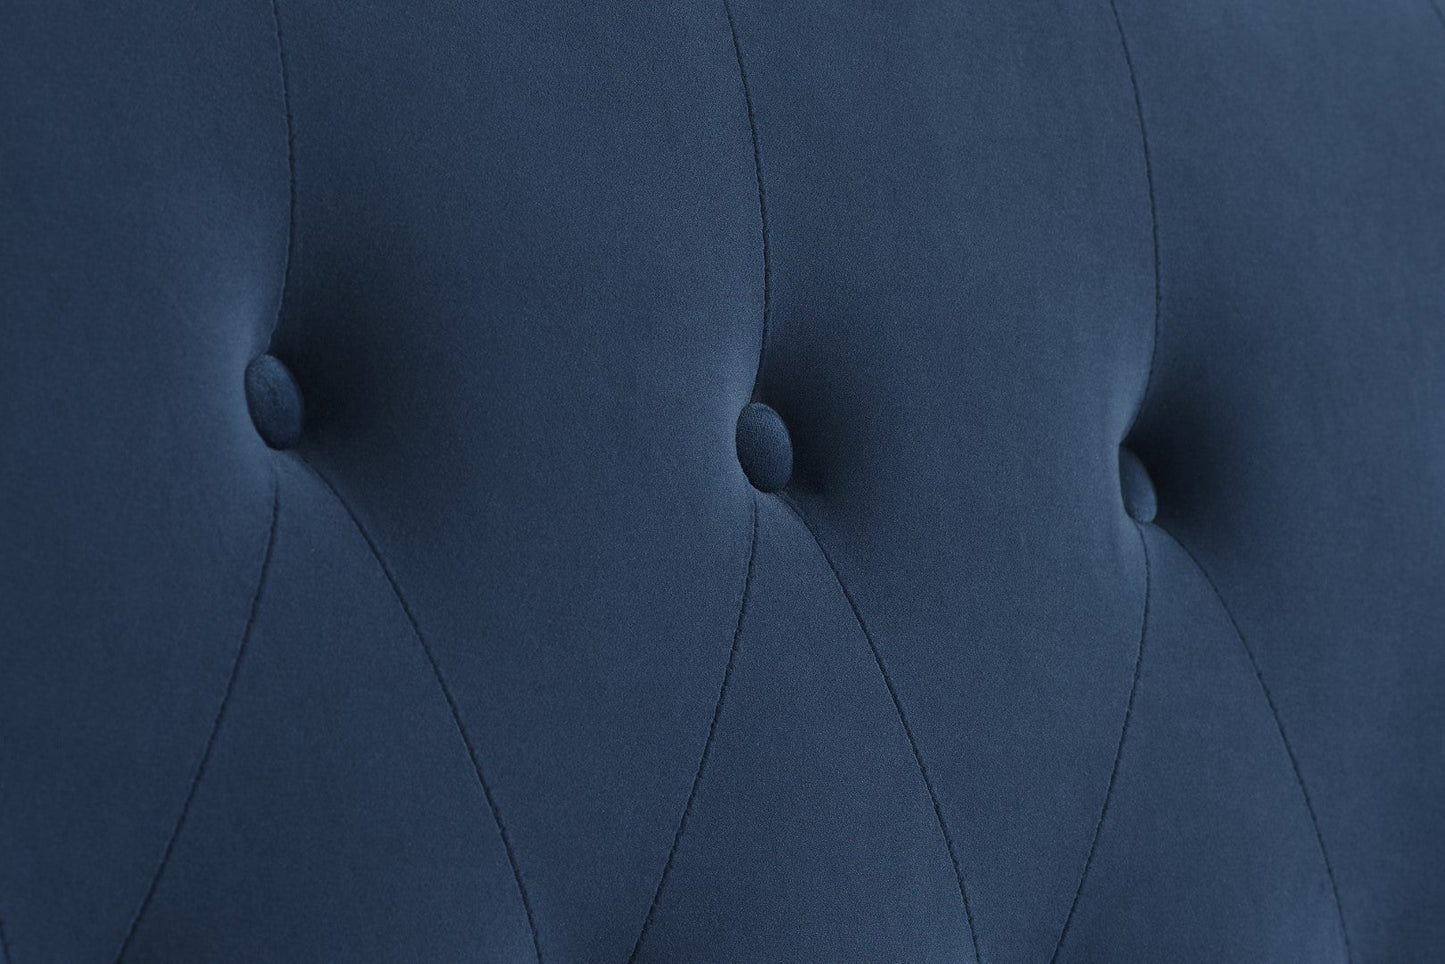 Birlea Brompton 4ft6 Double Blue Fabric Bed Frame